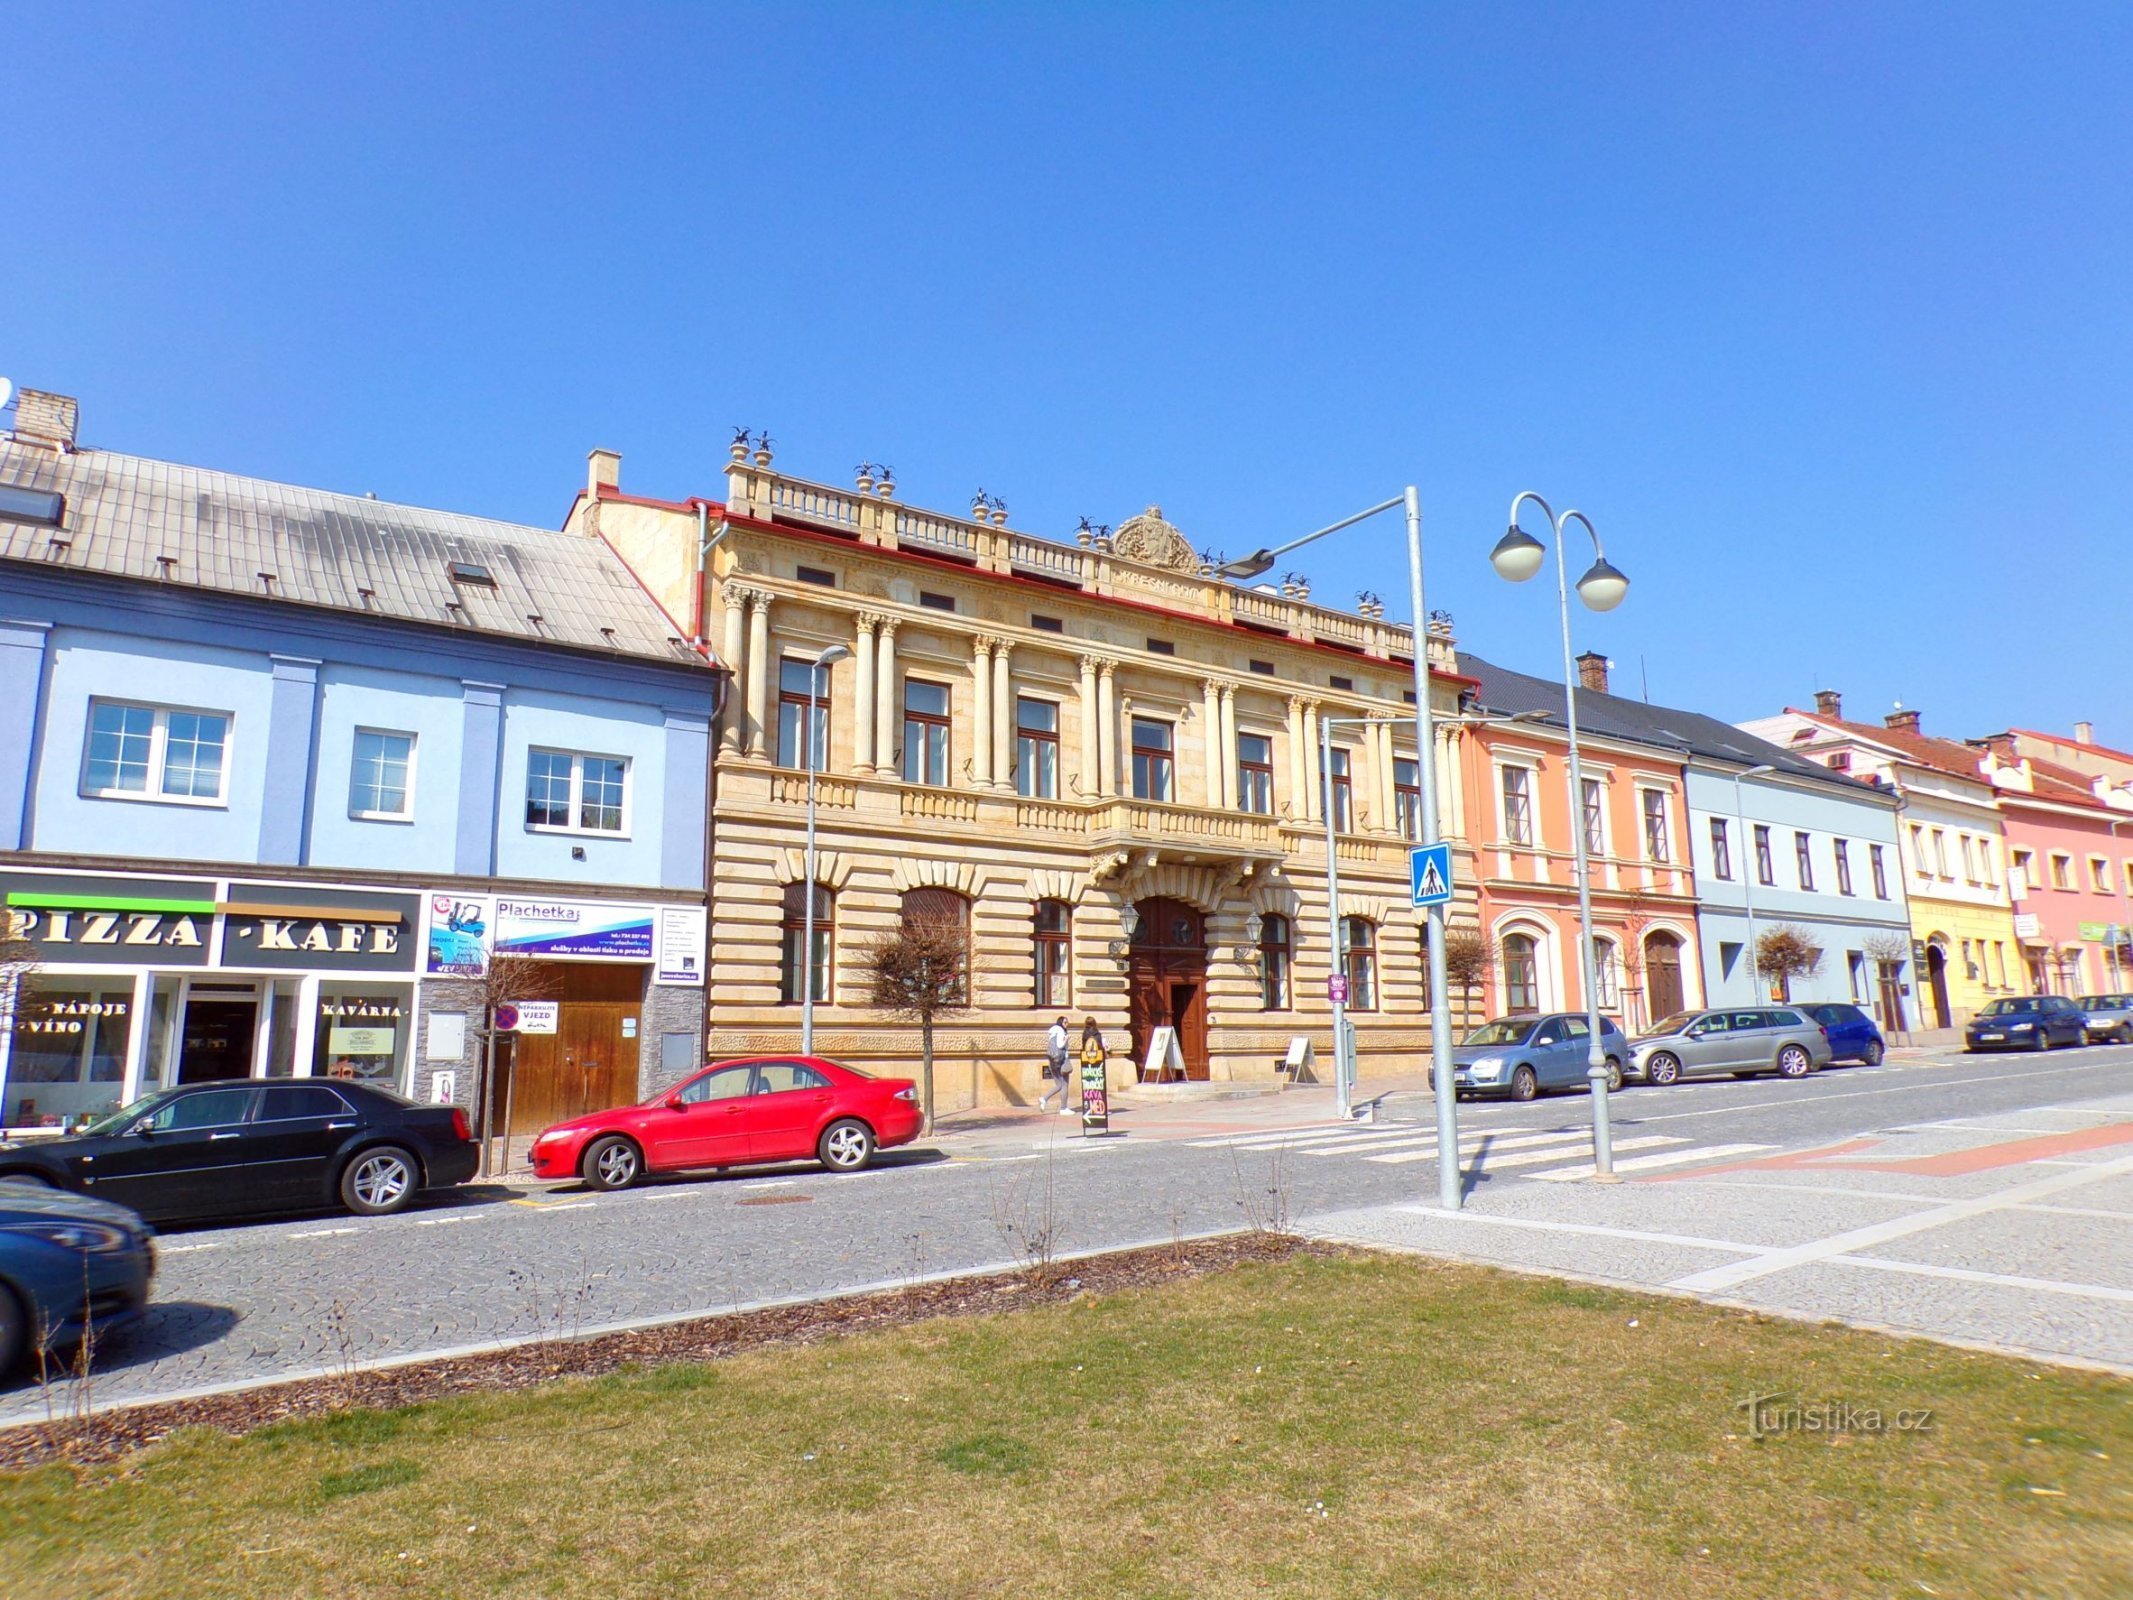 Maison de district (Hořice, 25.3.2022/XNUMX/XNUMX)